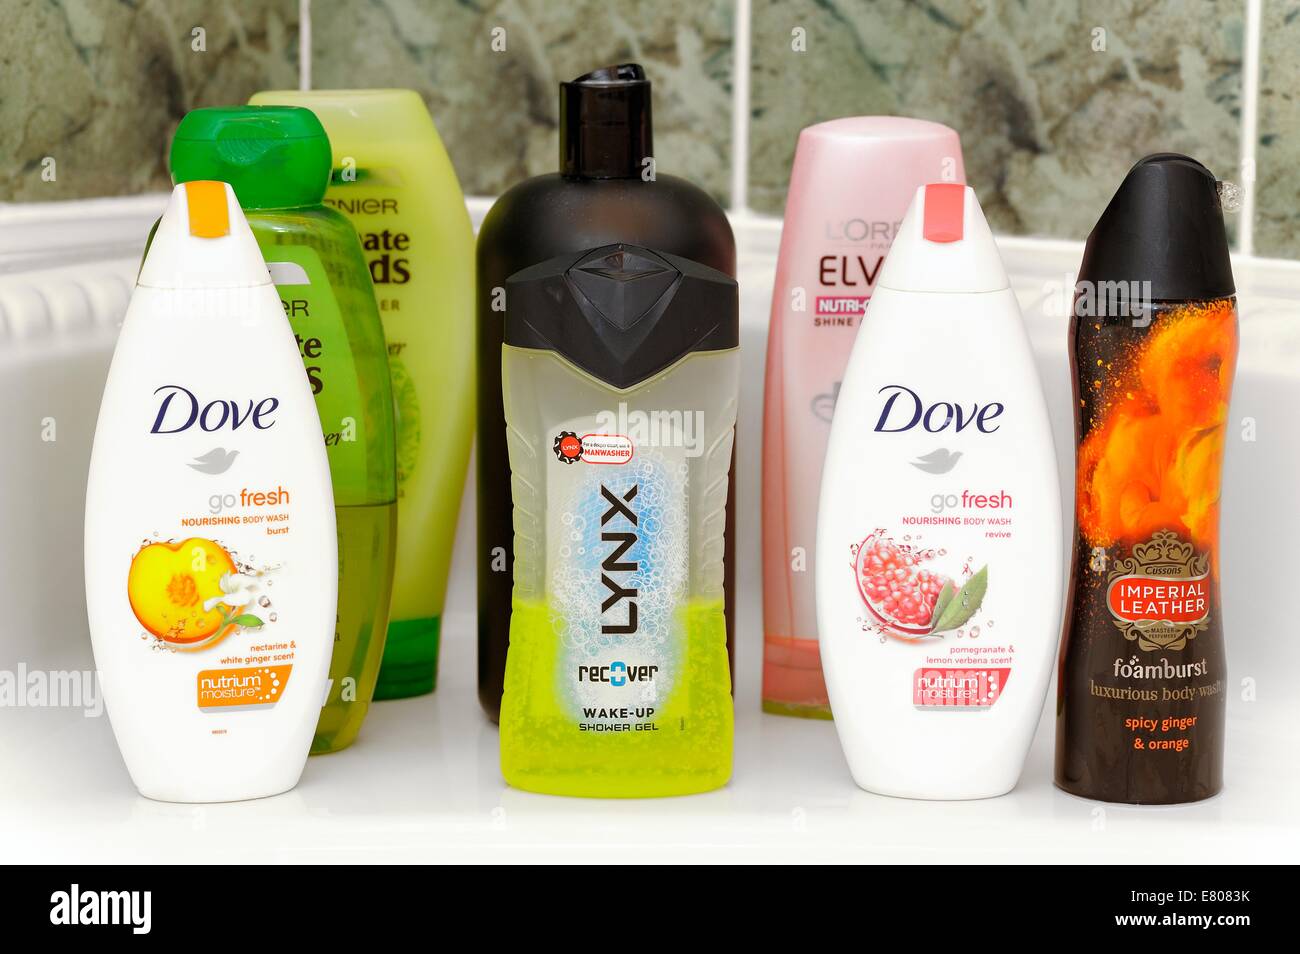 Body wash and shampoo bathroom products Stock Photo